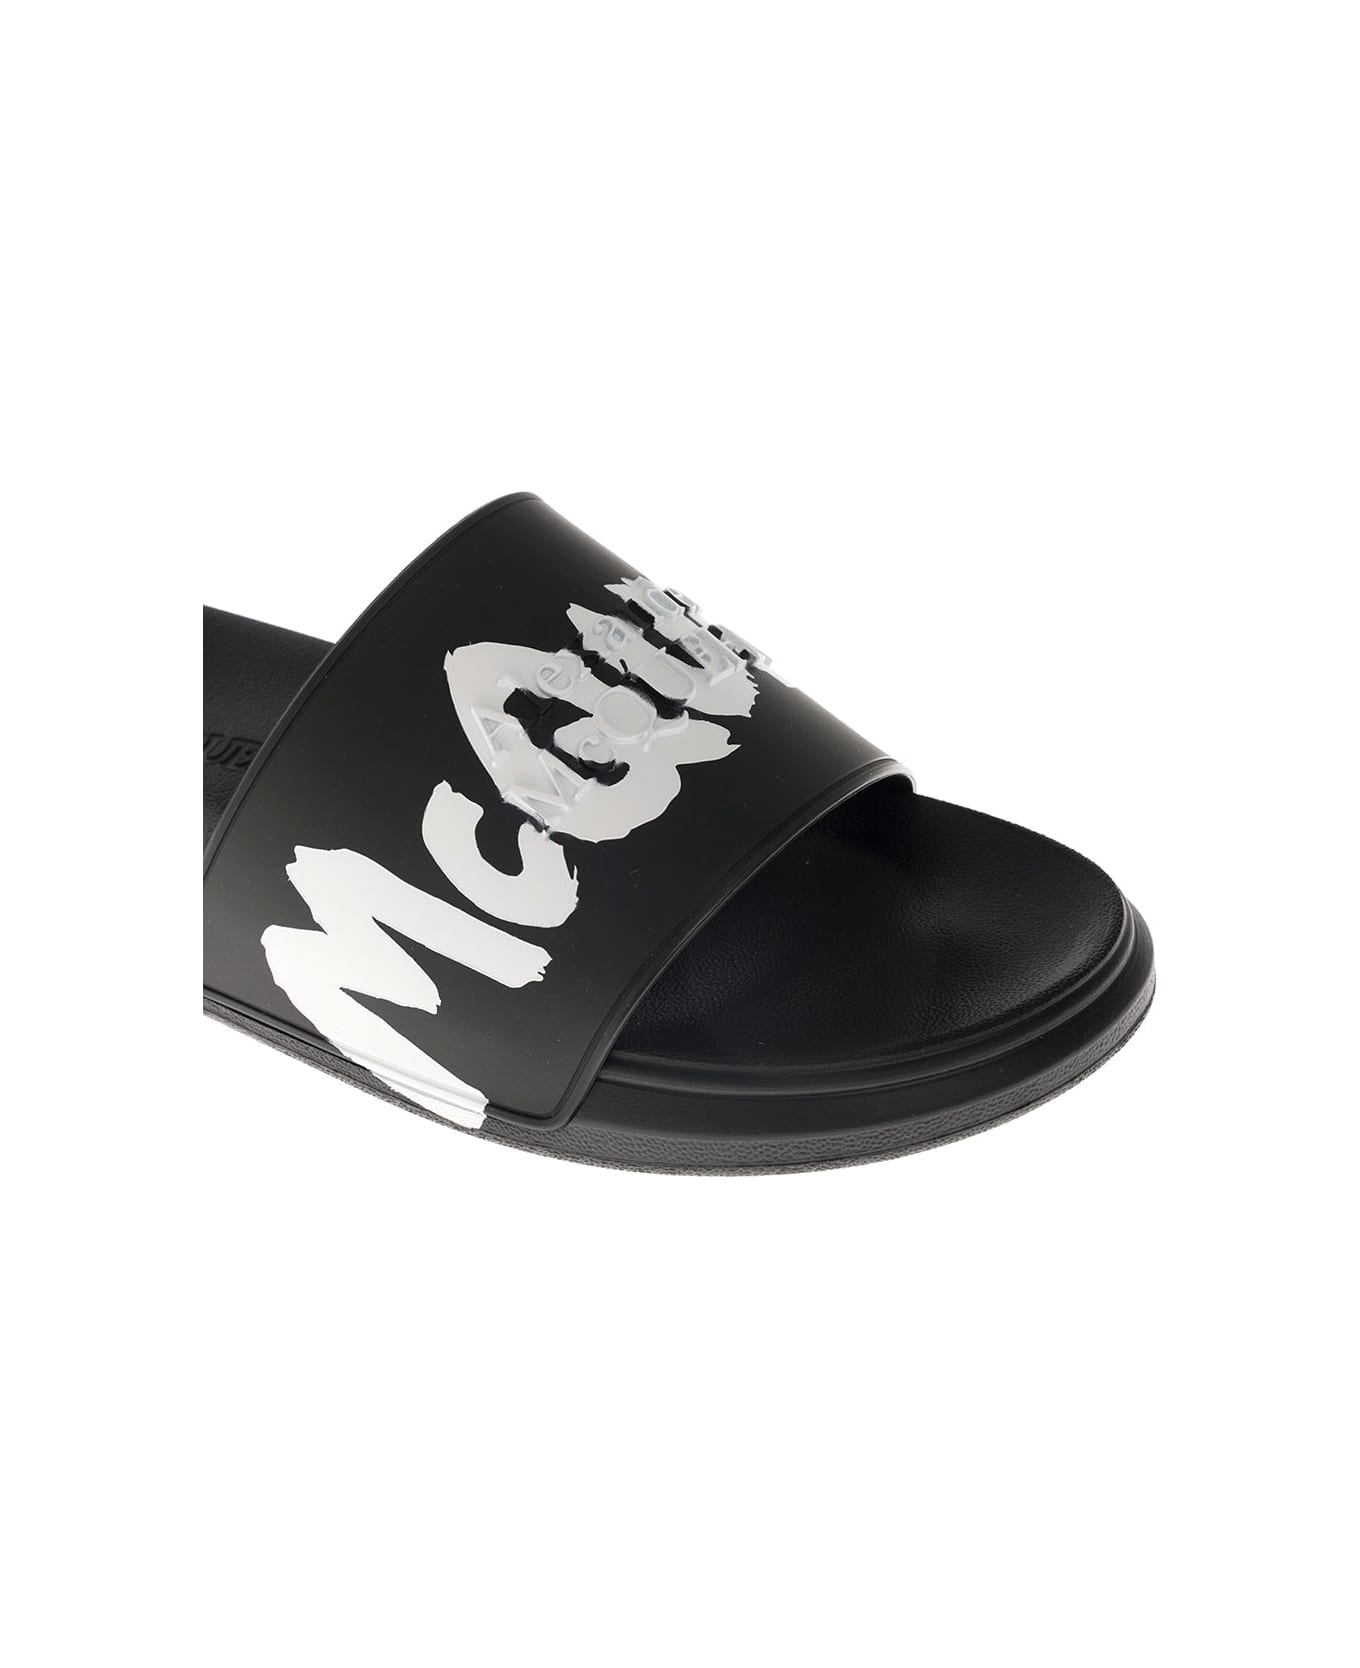 Alexander McQueen Black Rubber Slide Sandals With Logo - Black